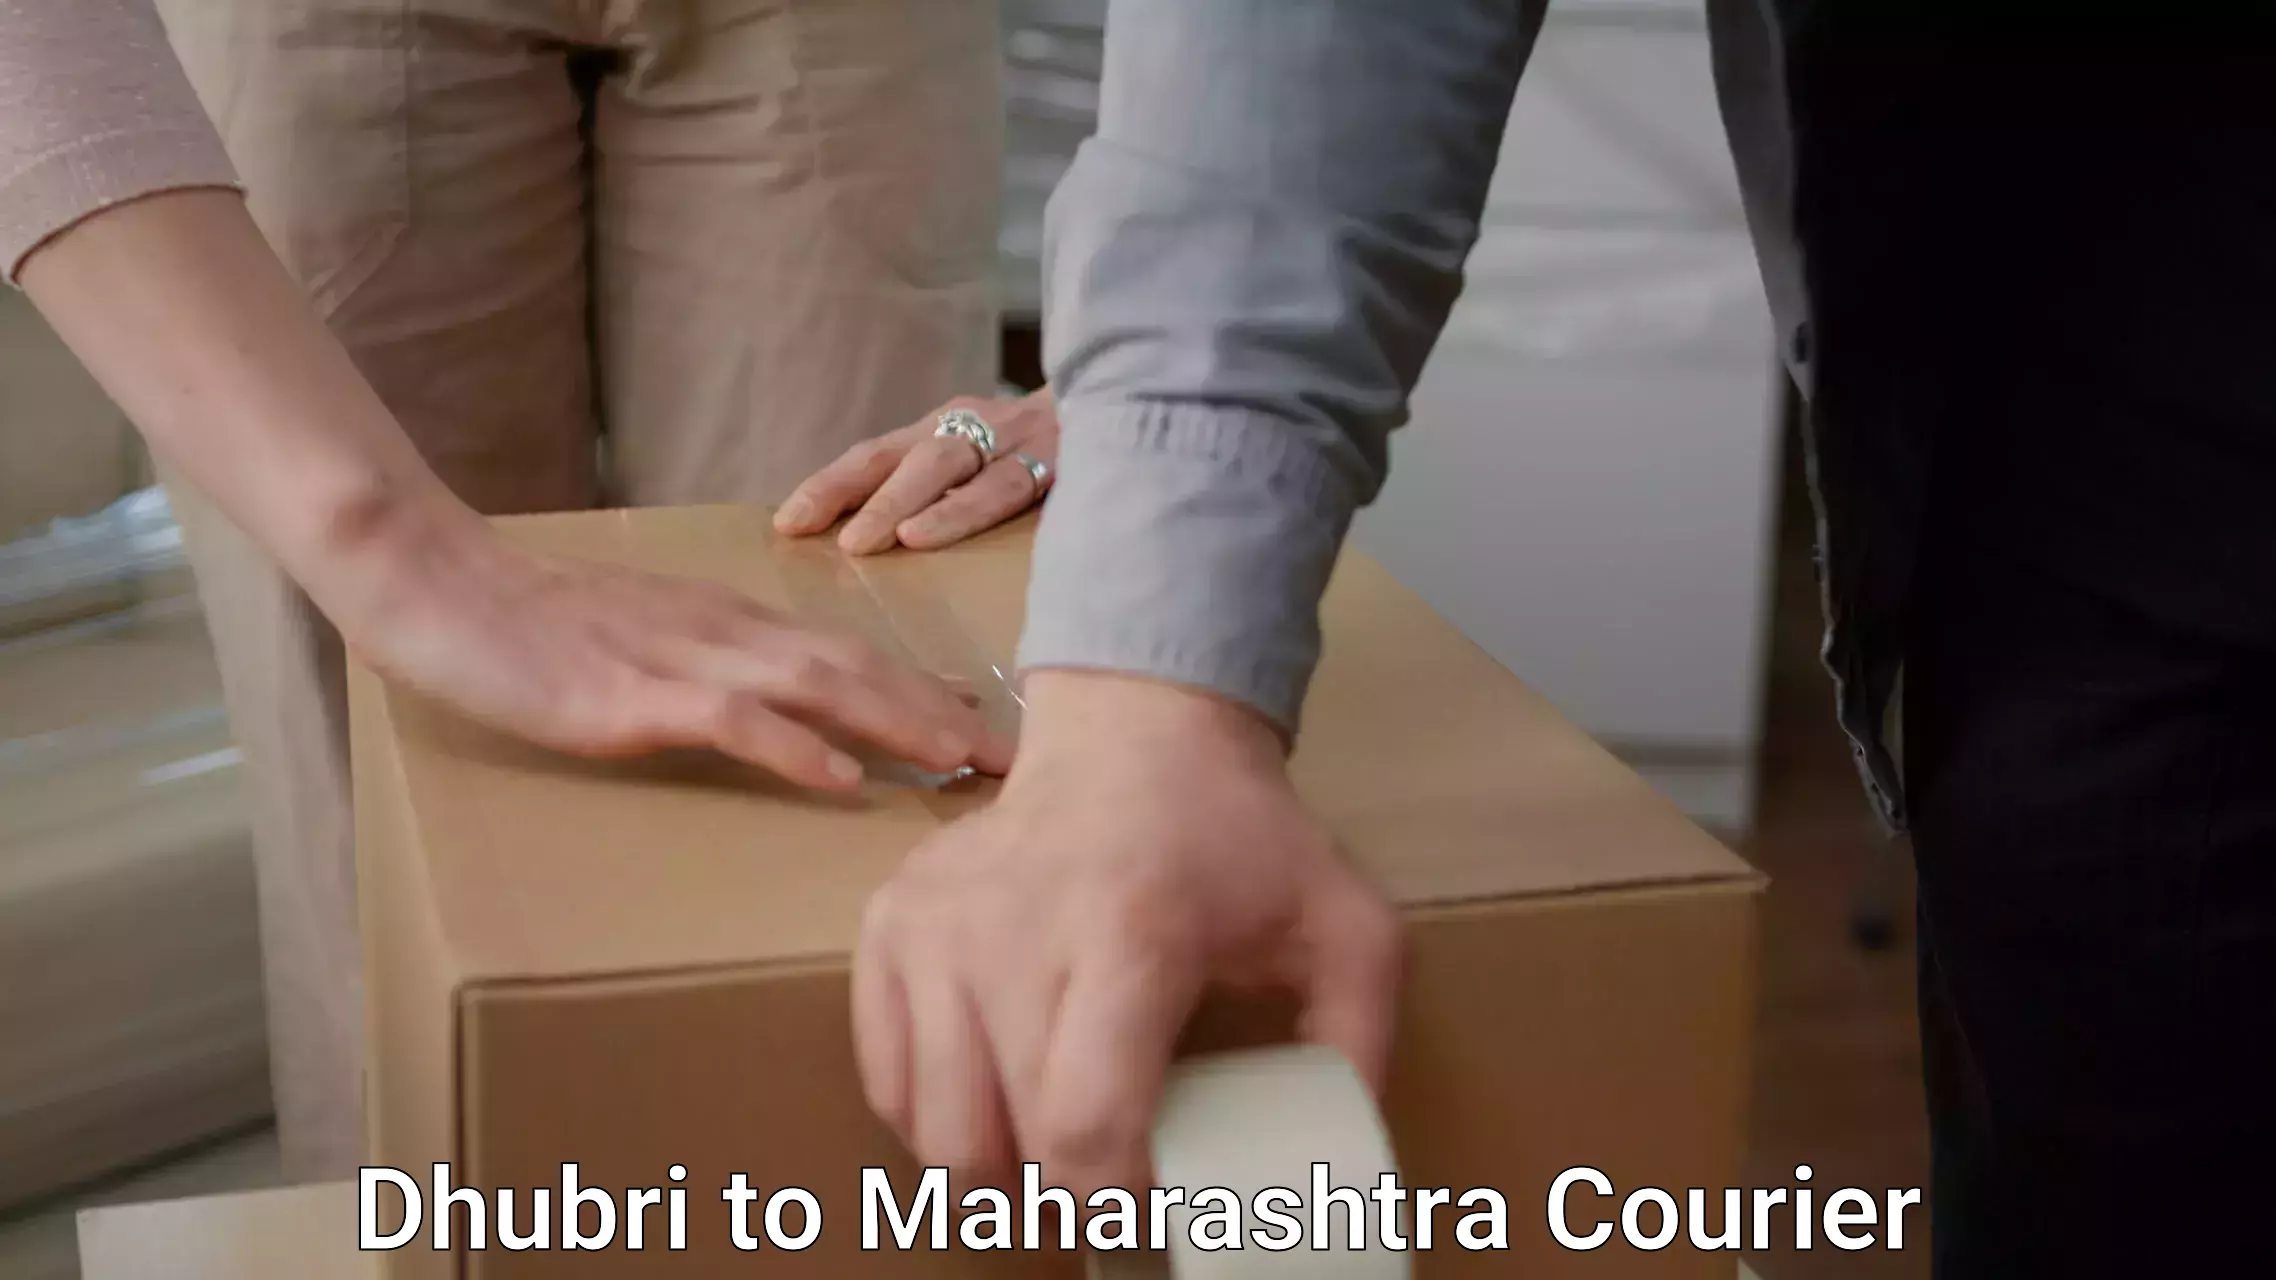 Professional moving company Dhubri to Nandurbar